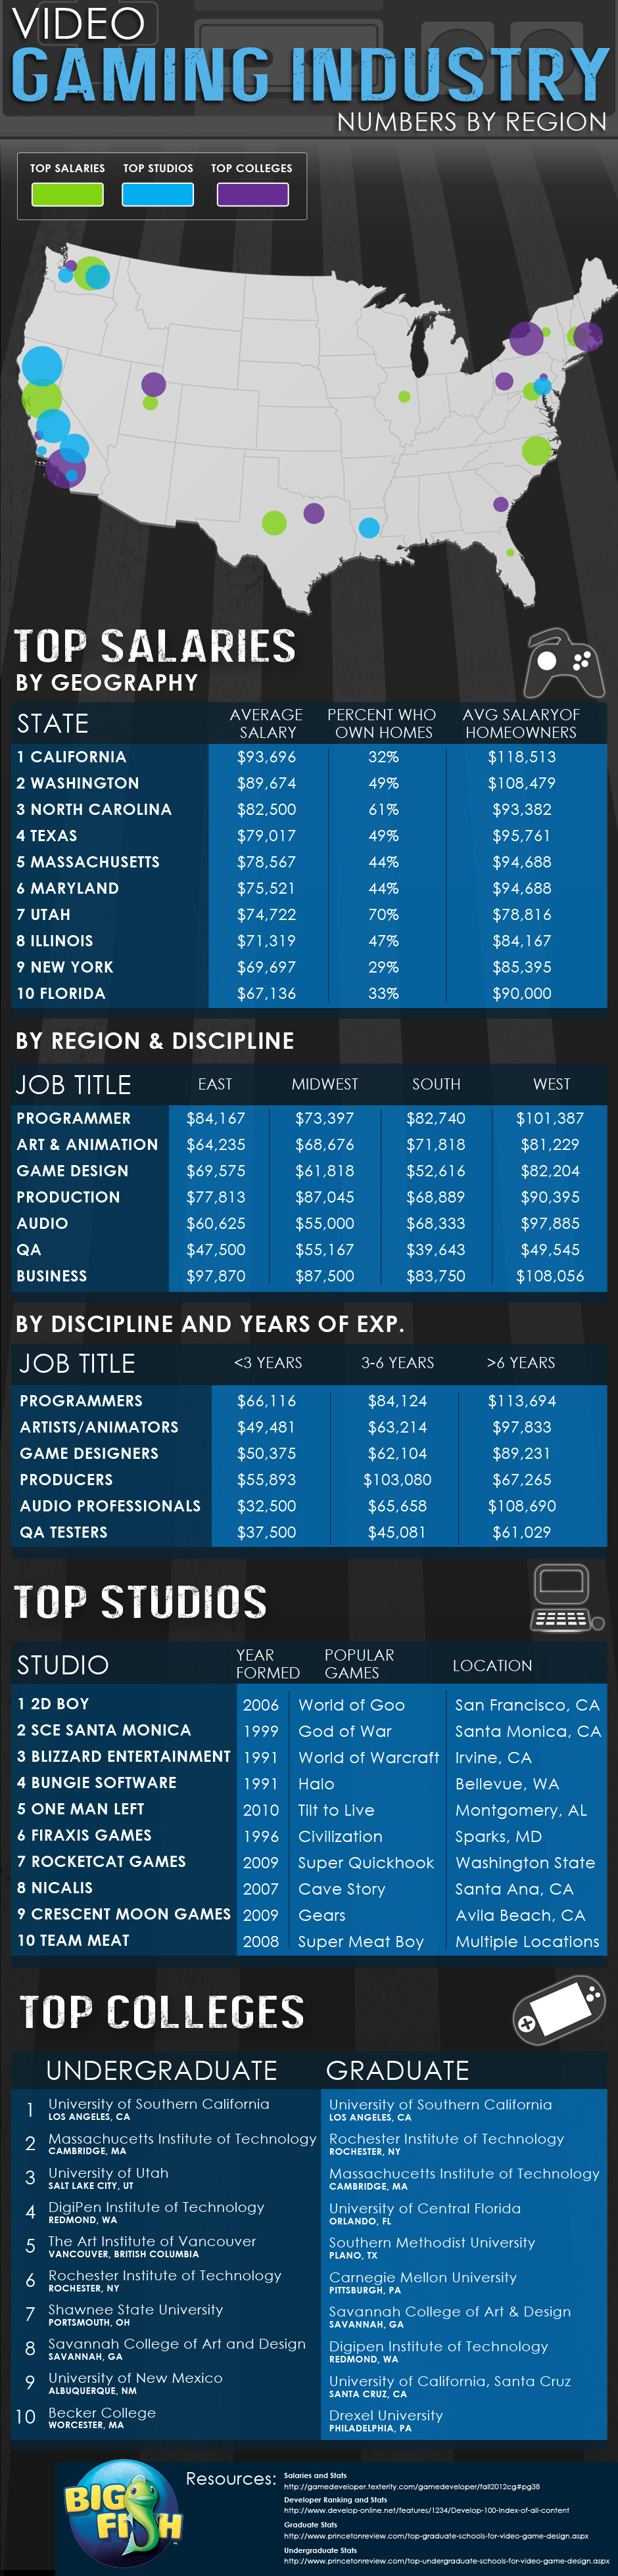 Top Gaming Studios, Schools & Salaries For The Gaming Industry